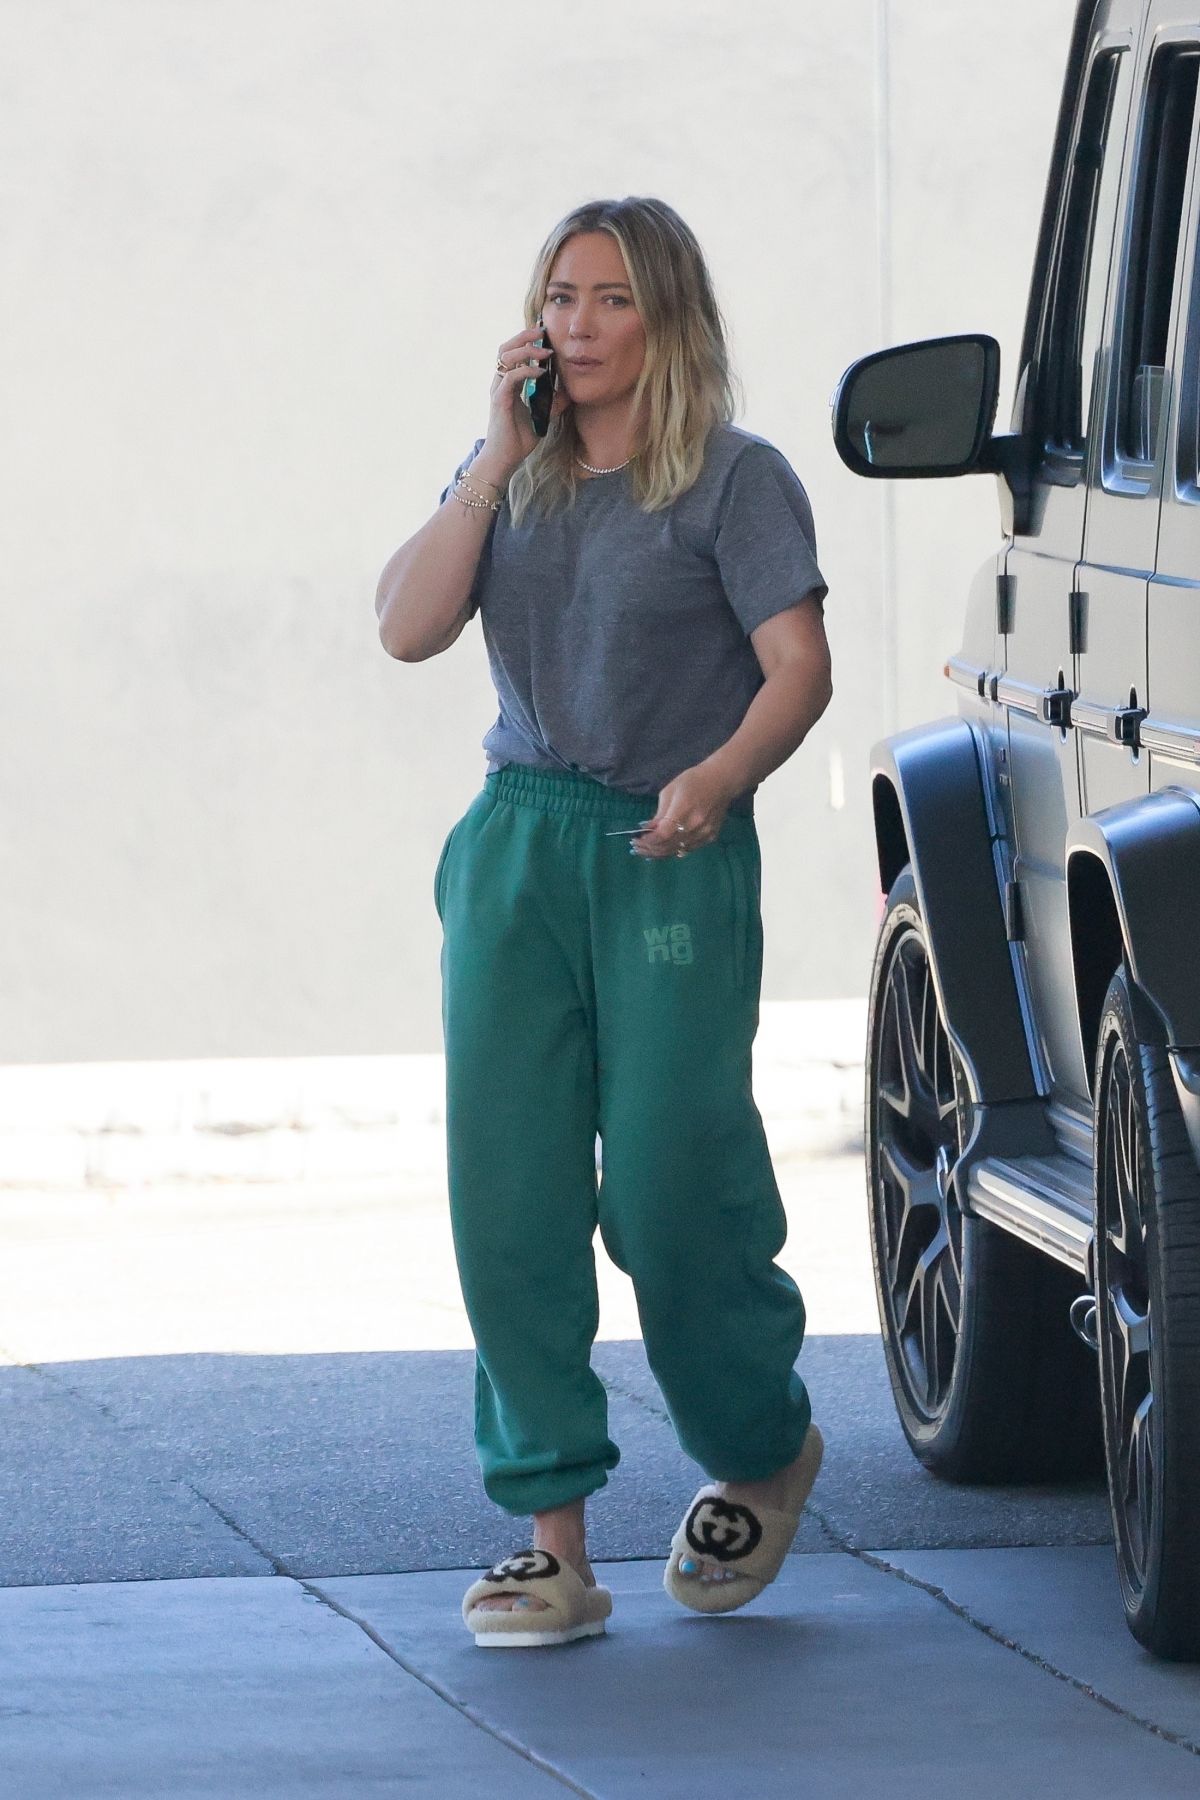 Hilary Duff Studio City February 14, 2020 – Star Style